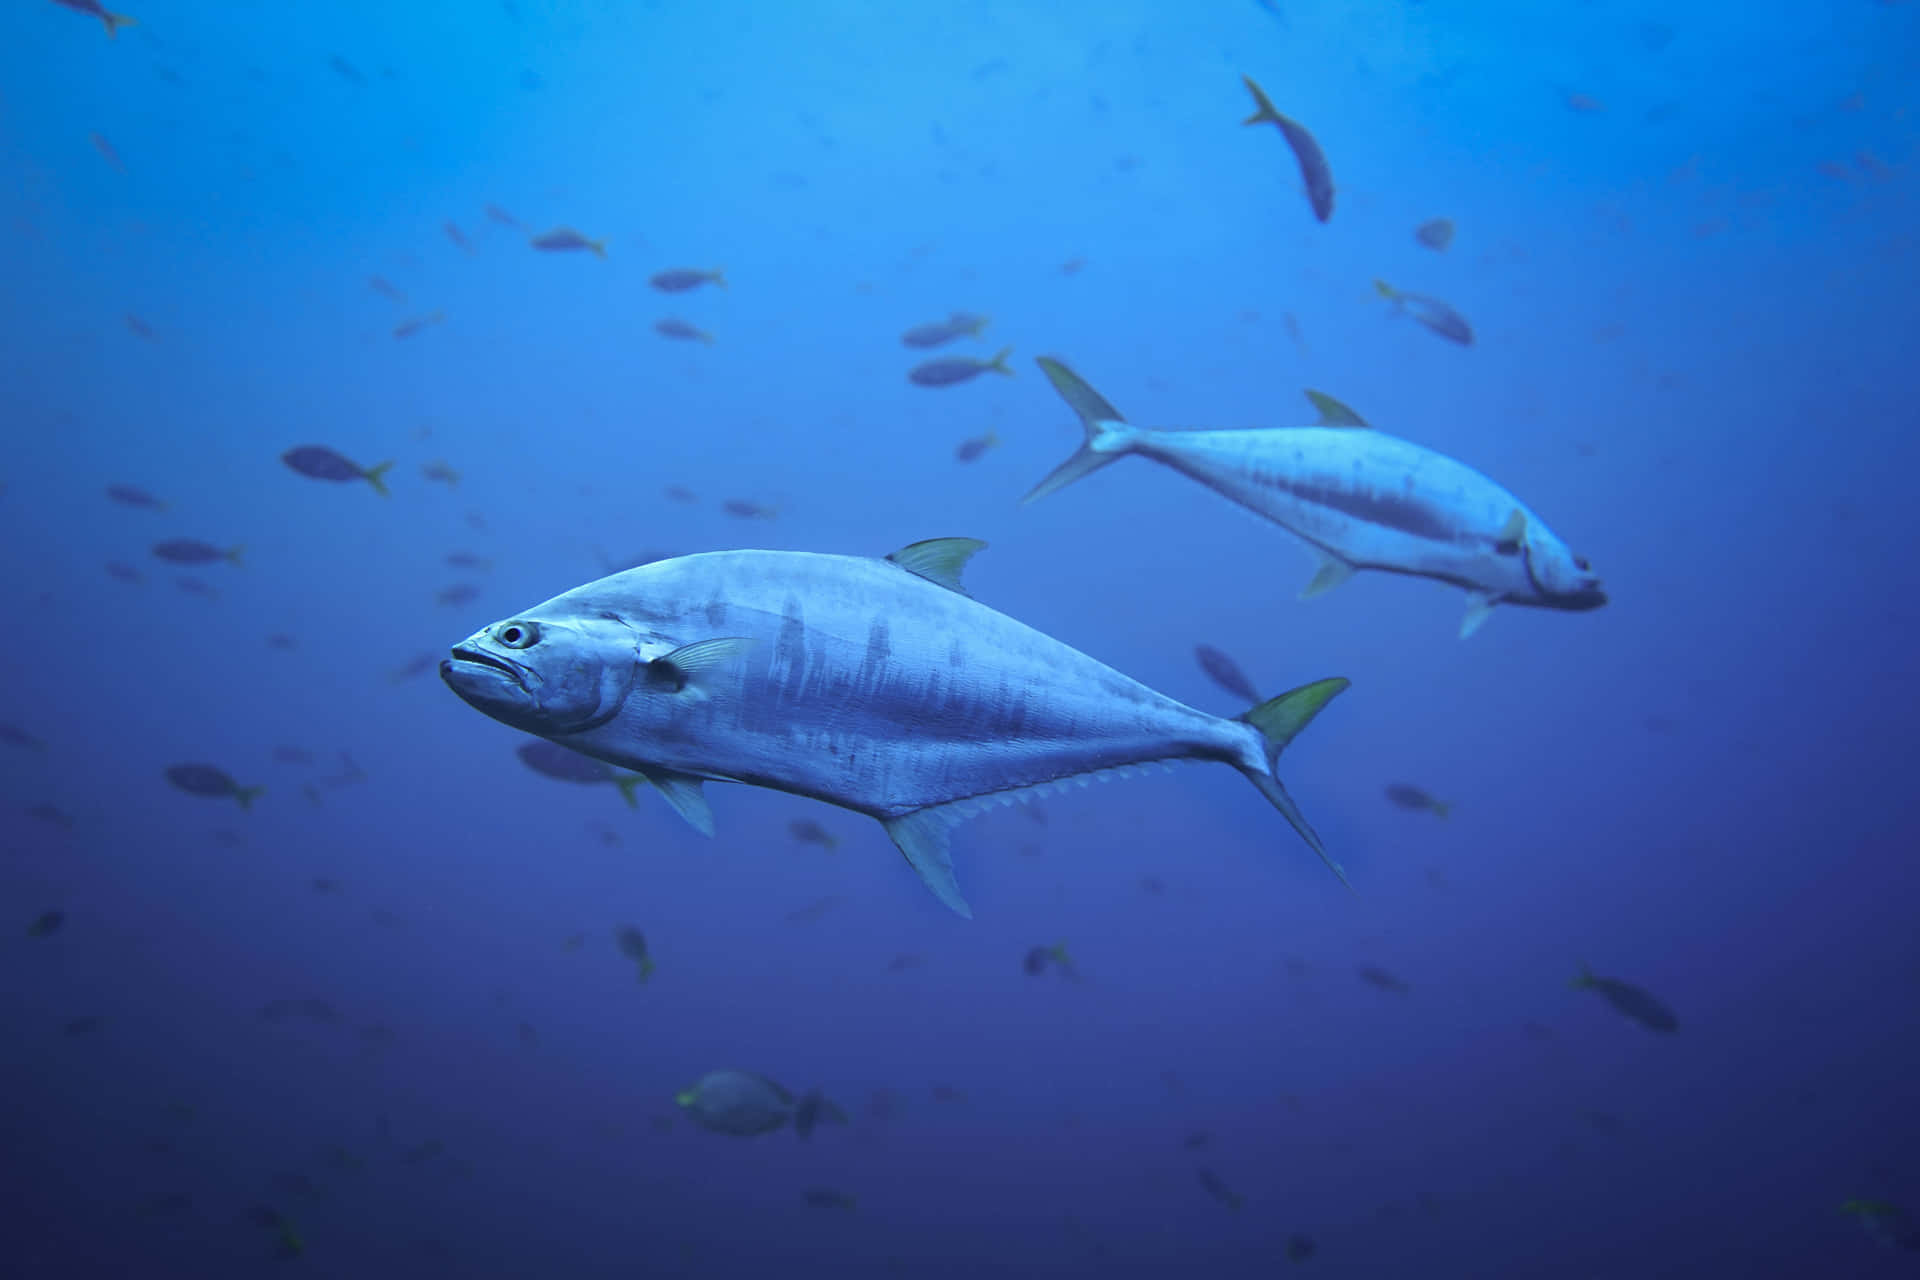 Iridescent Fish Scales Close-Up Wallpaper